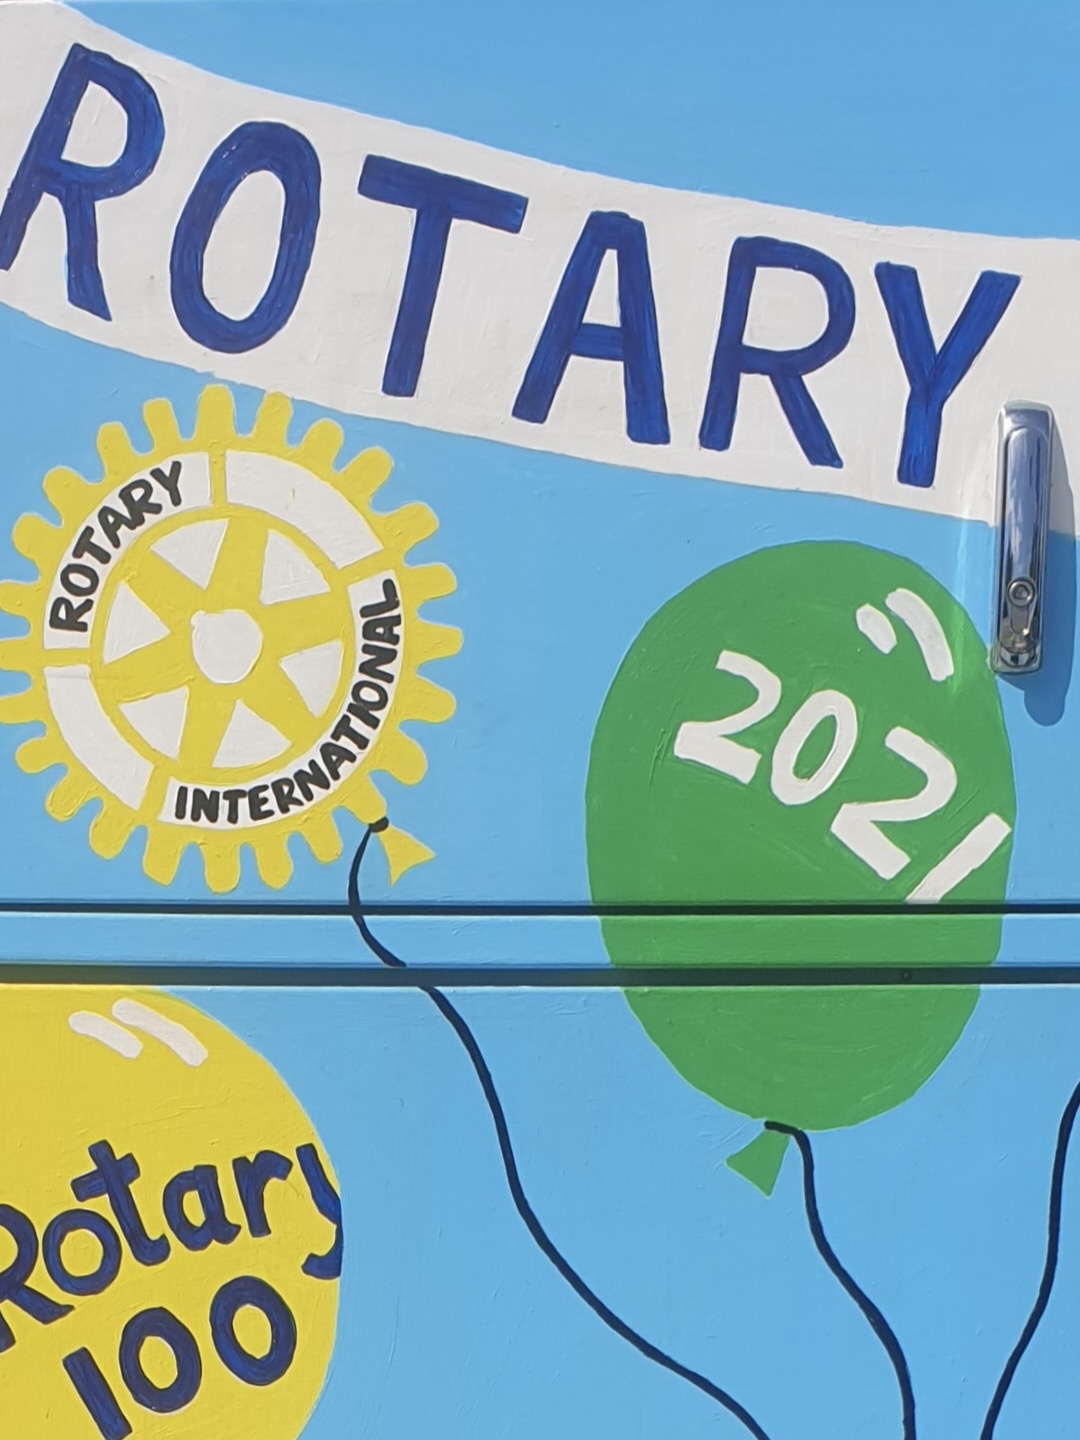 B0731-Natalie_Lynch_&_Rotary-Rotary_Australia_celebrates_100_years_in_2021-10